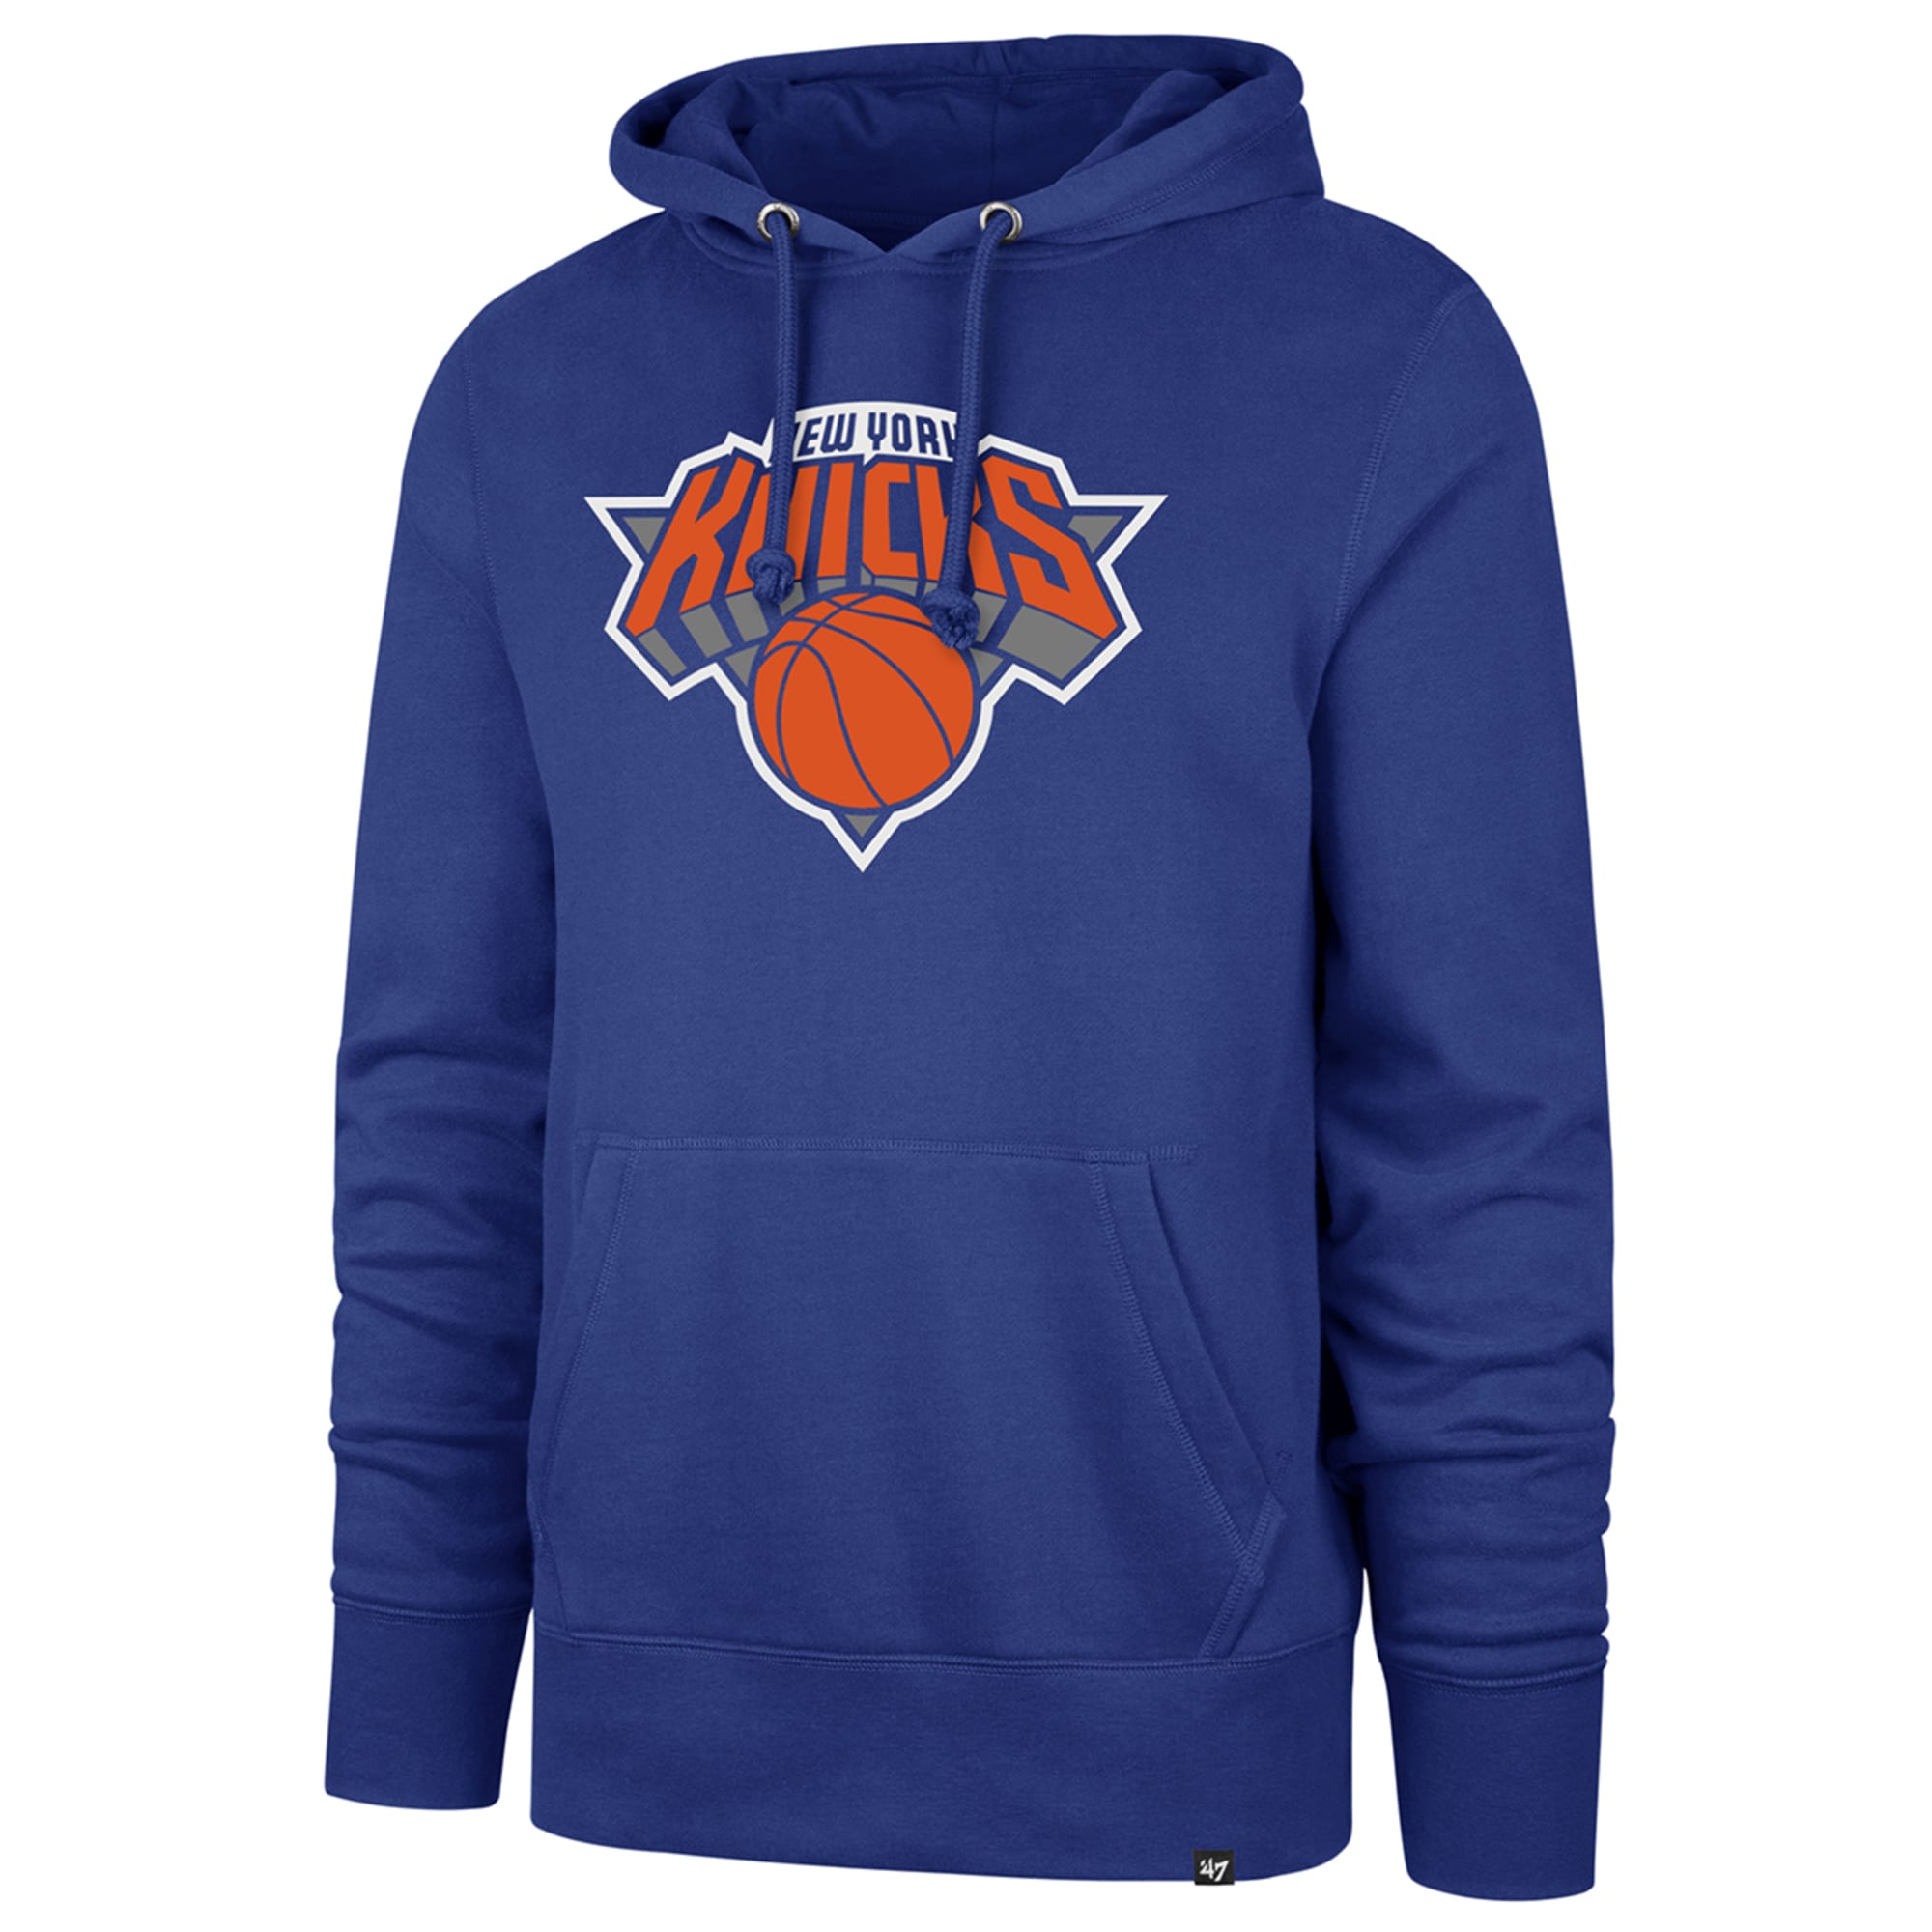 47 Brand / Men's New York Knicks Pullover Hoodie